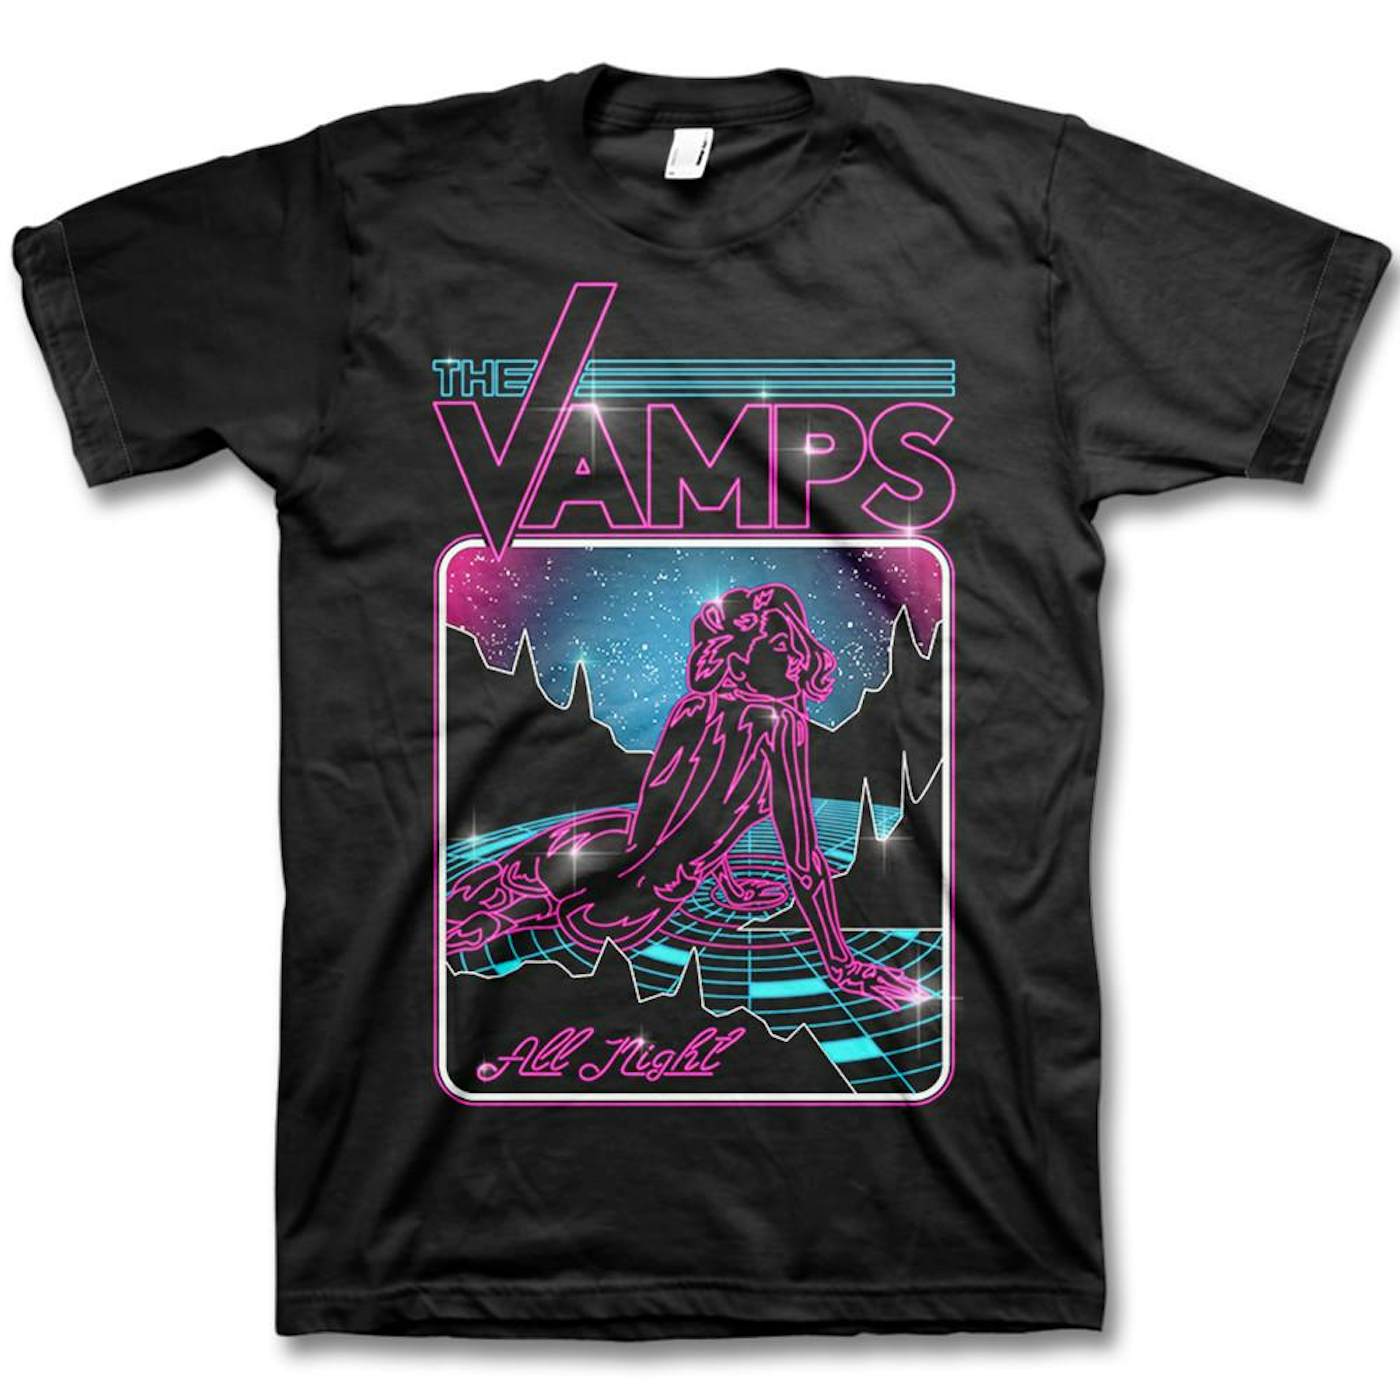 The Vamps Neon Girl Cuffed T-shirt - Men's